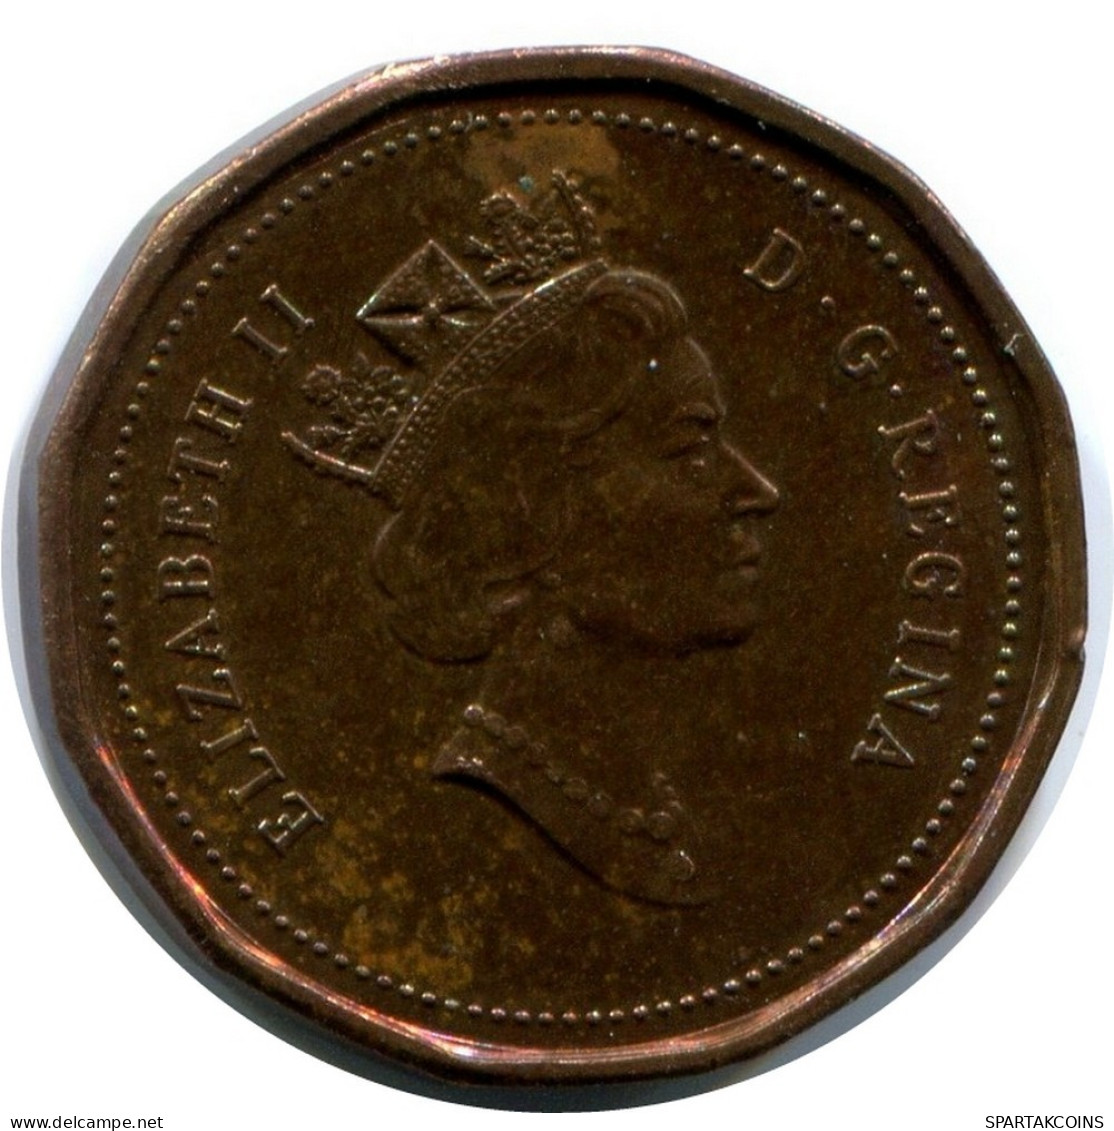 1 CENT 1992 CANADA Coin #AX384.U.A - Canada